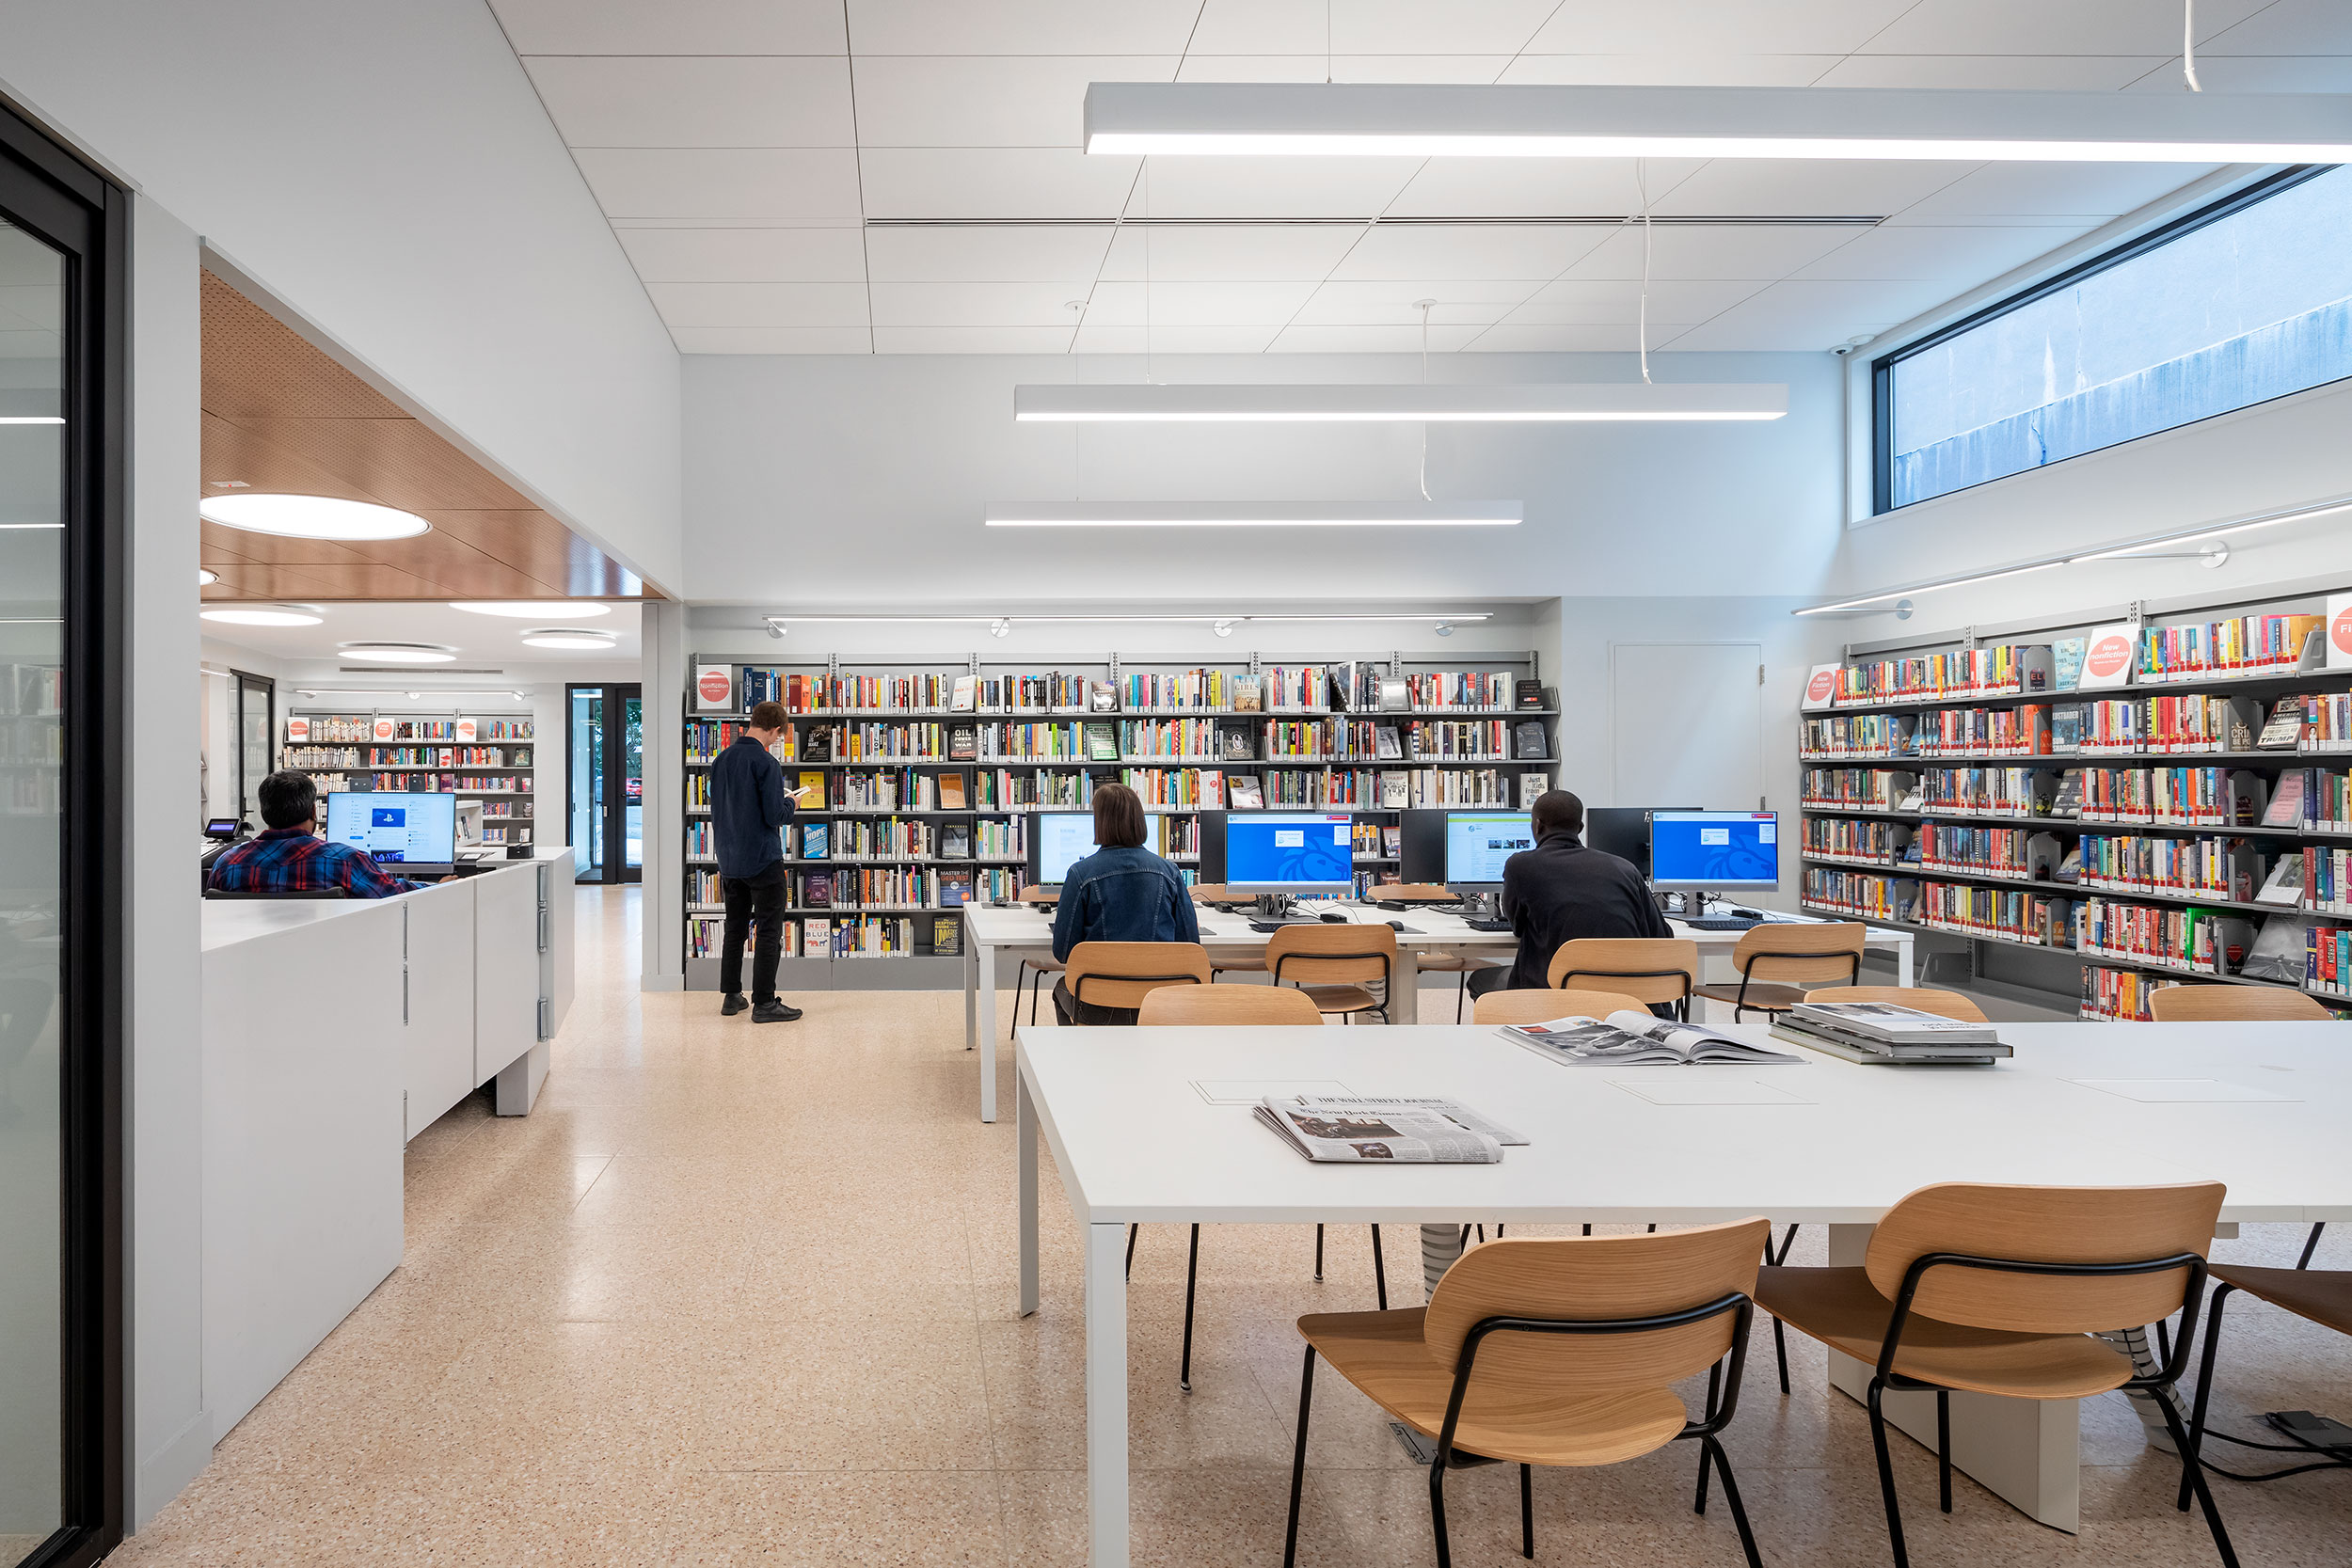 New York Public Library Van Cortlandt Branch. Architect: Andrew Berman Architect. Location: Bronx, NY. Photo: Michael Moran.